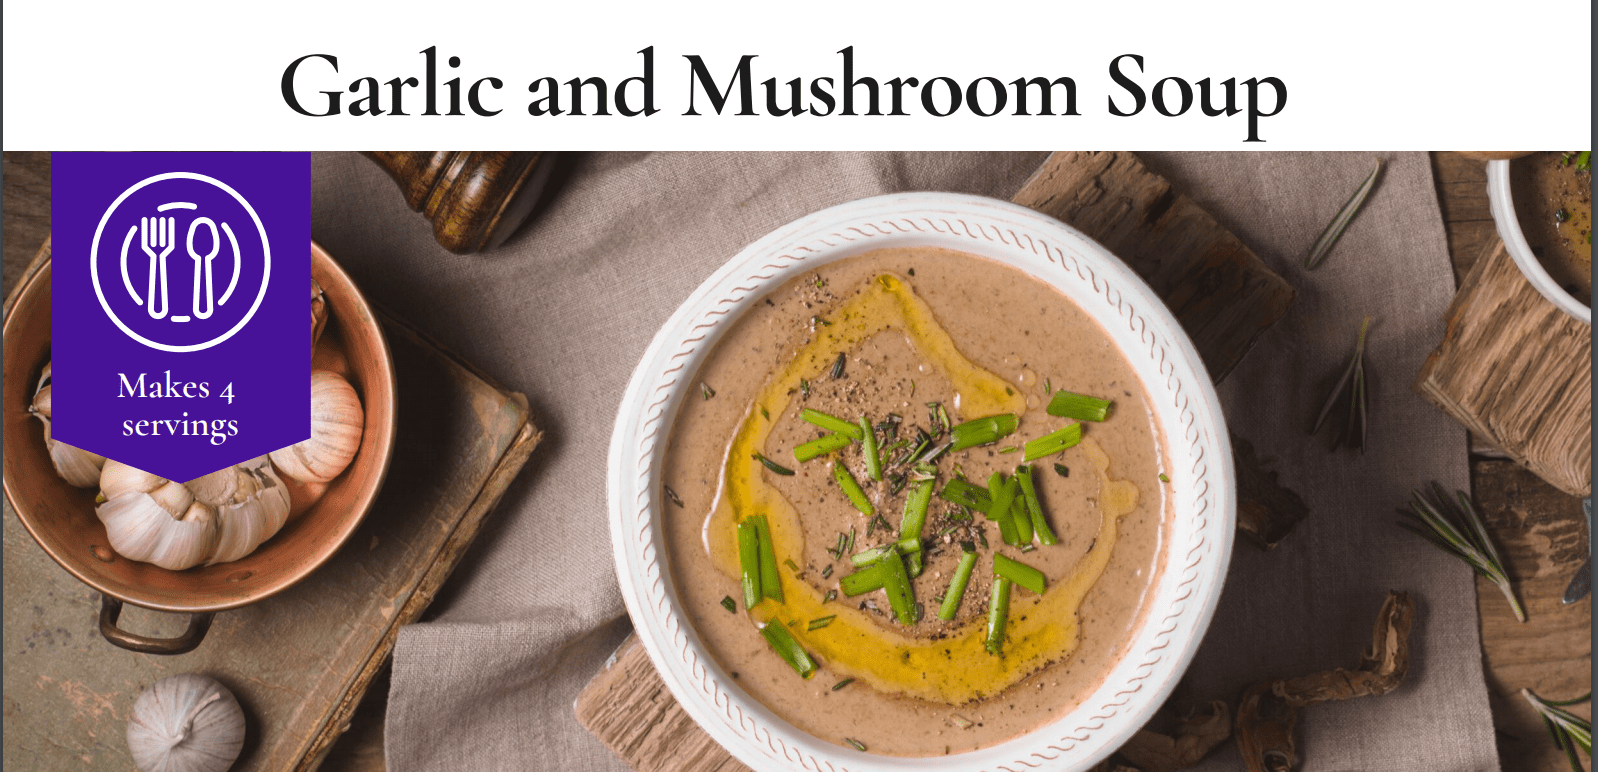 Garlic and Mushroom Soup Recipe (Gluten-Free & Dairy Free)